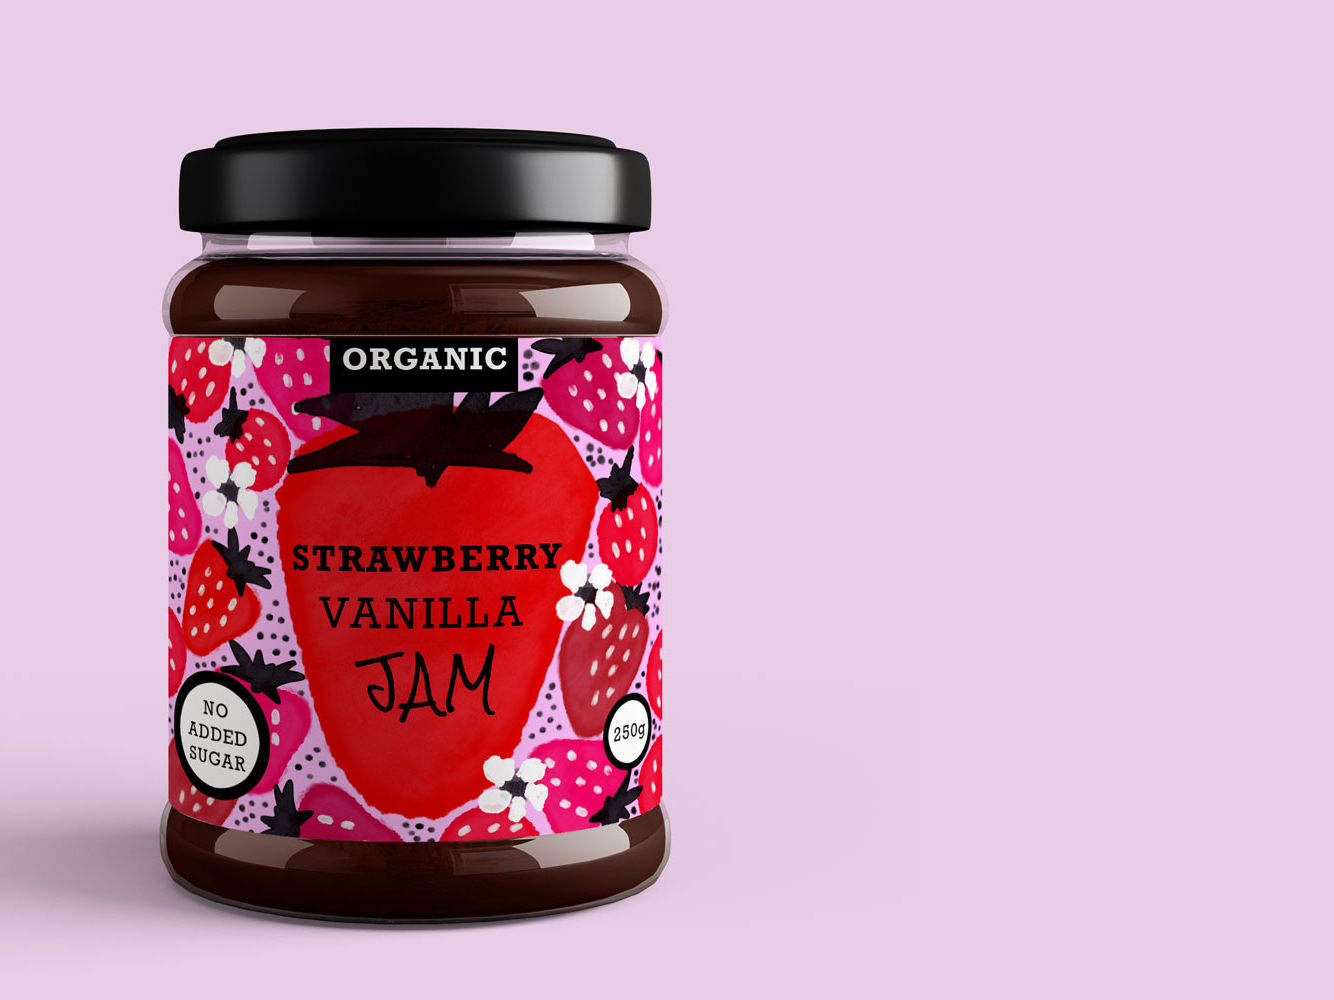 Organic Jam  Packaging and Label Design  by Tasha s Design  